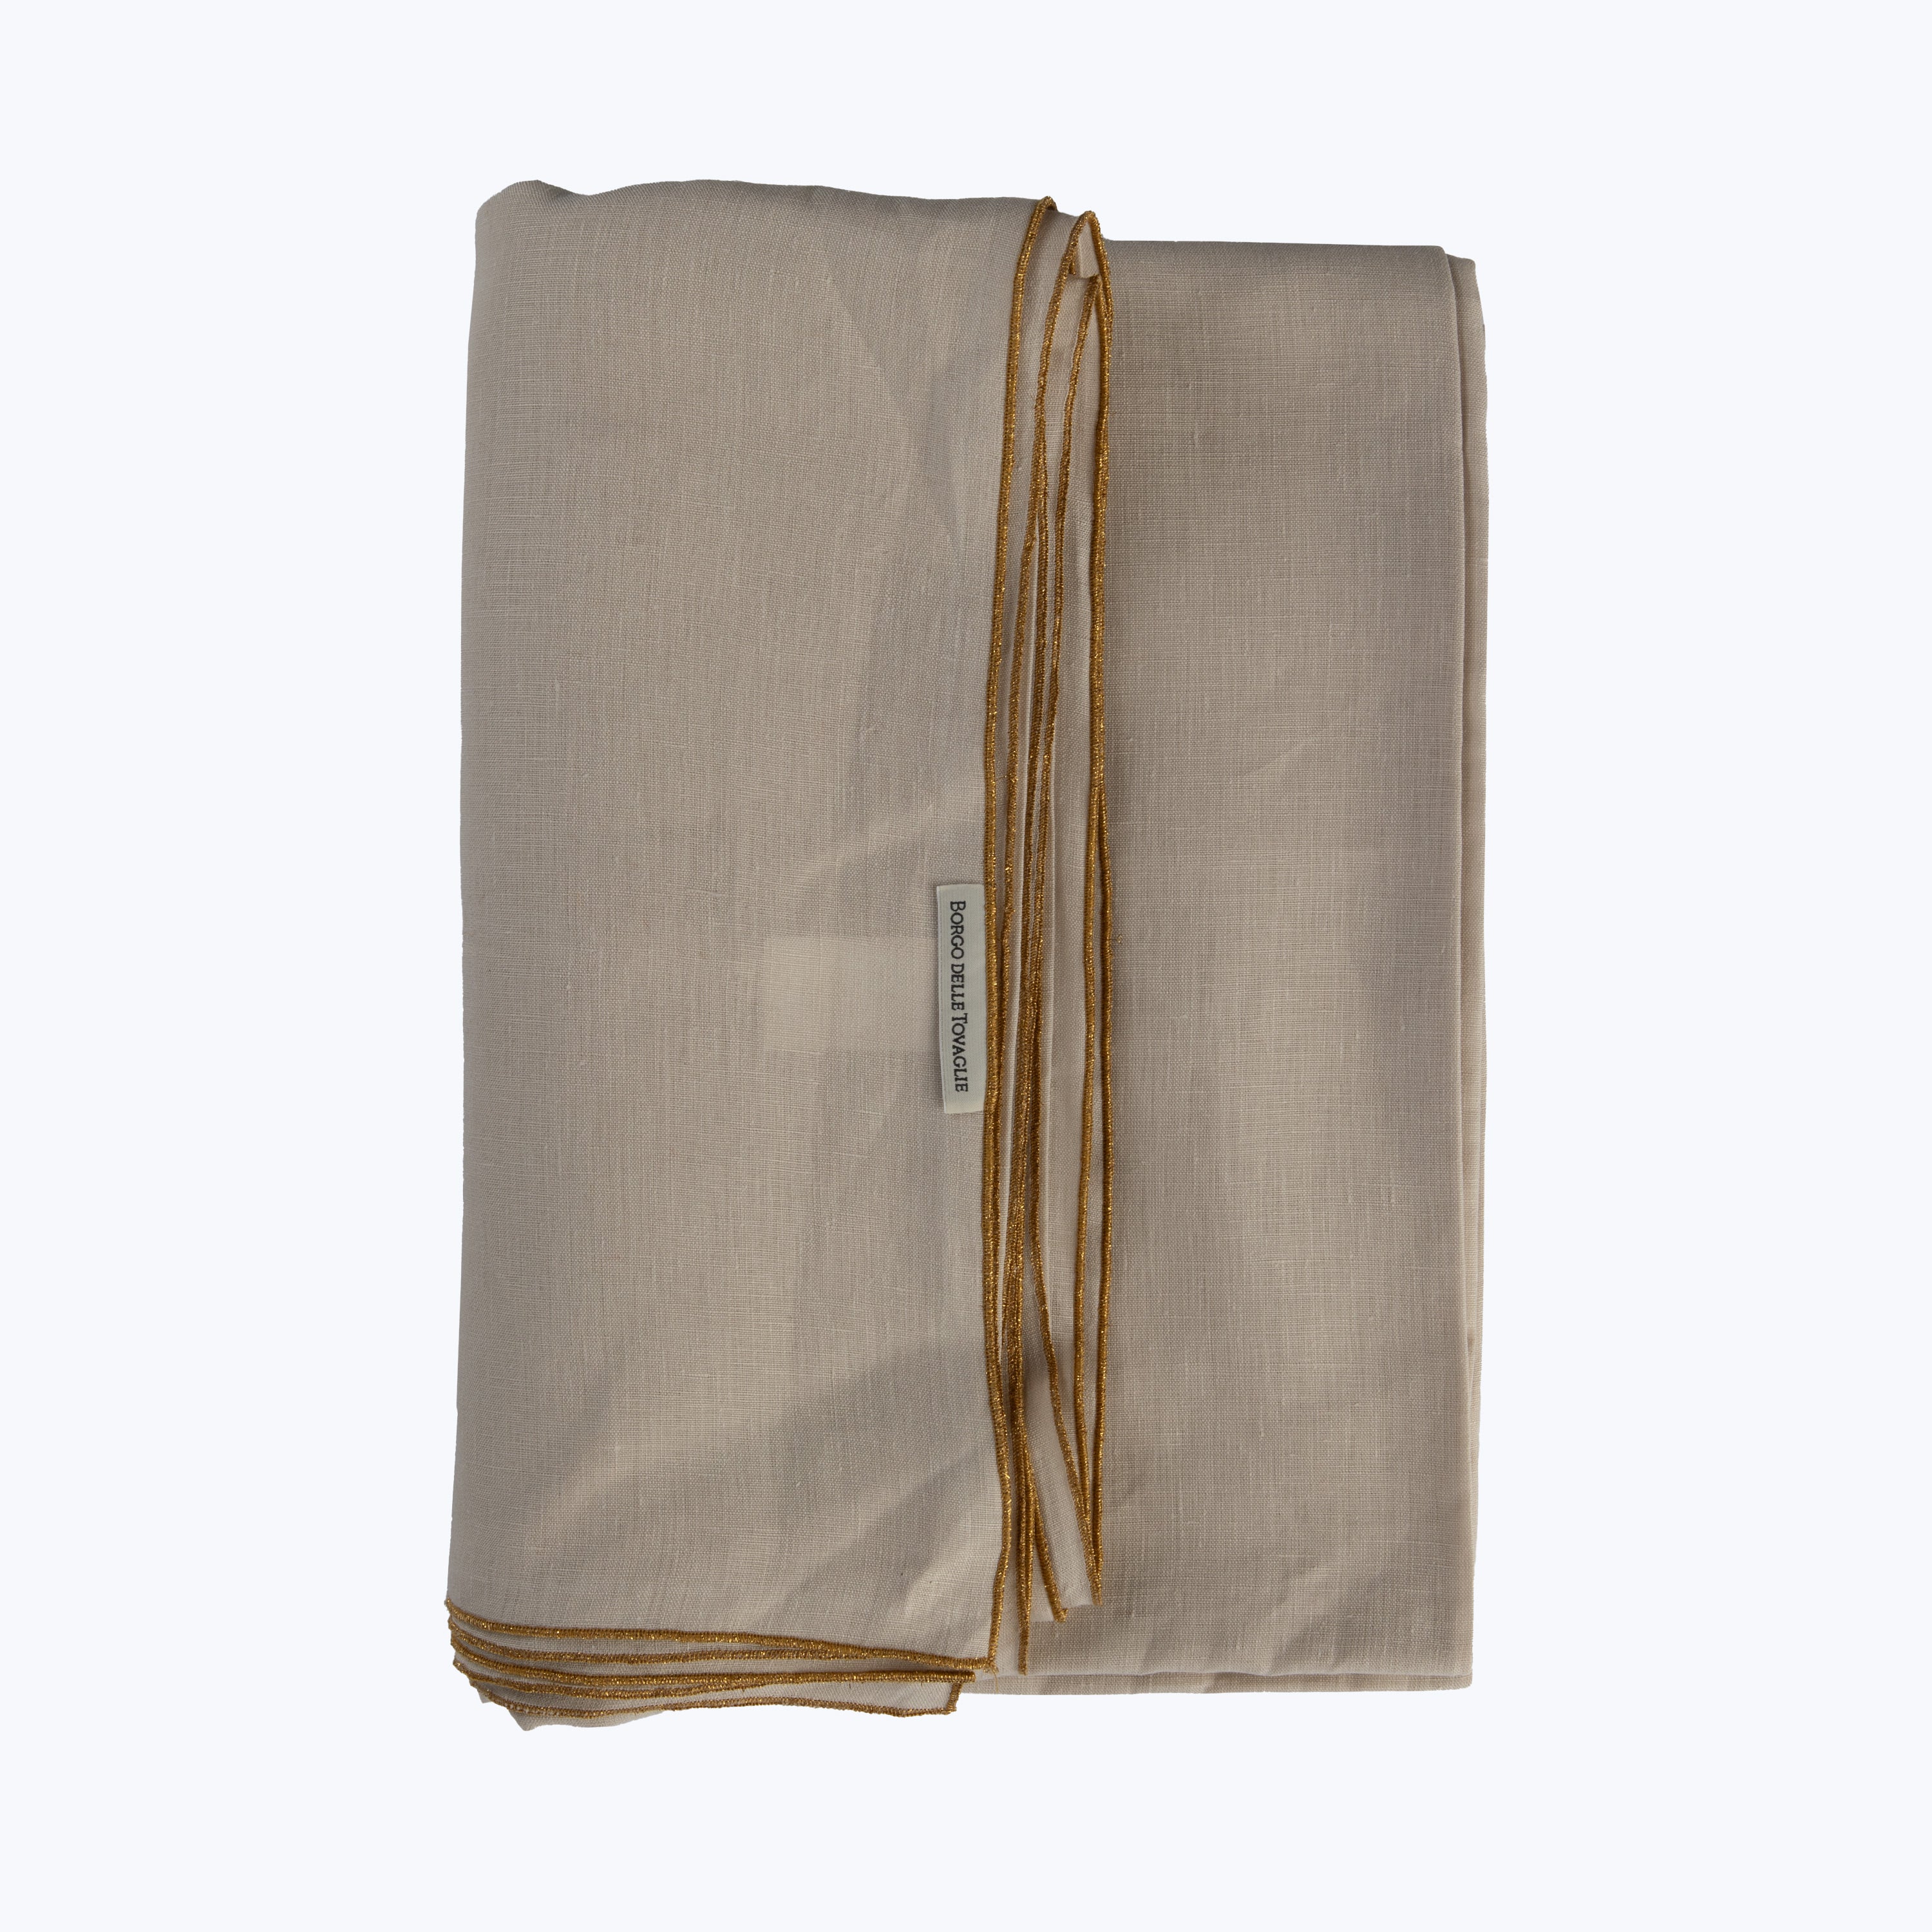 Metallic Linen Tablecloth Salt/Gold / 86" x 138"